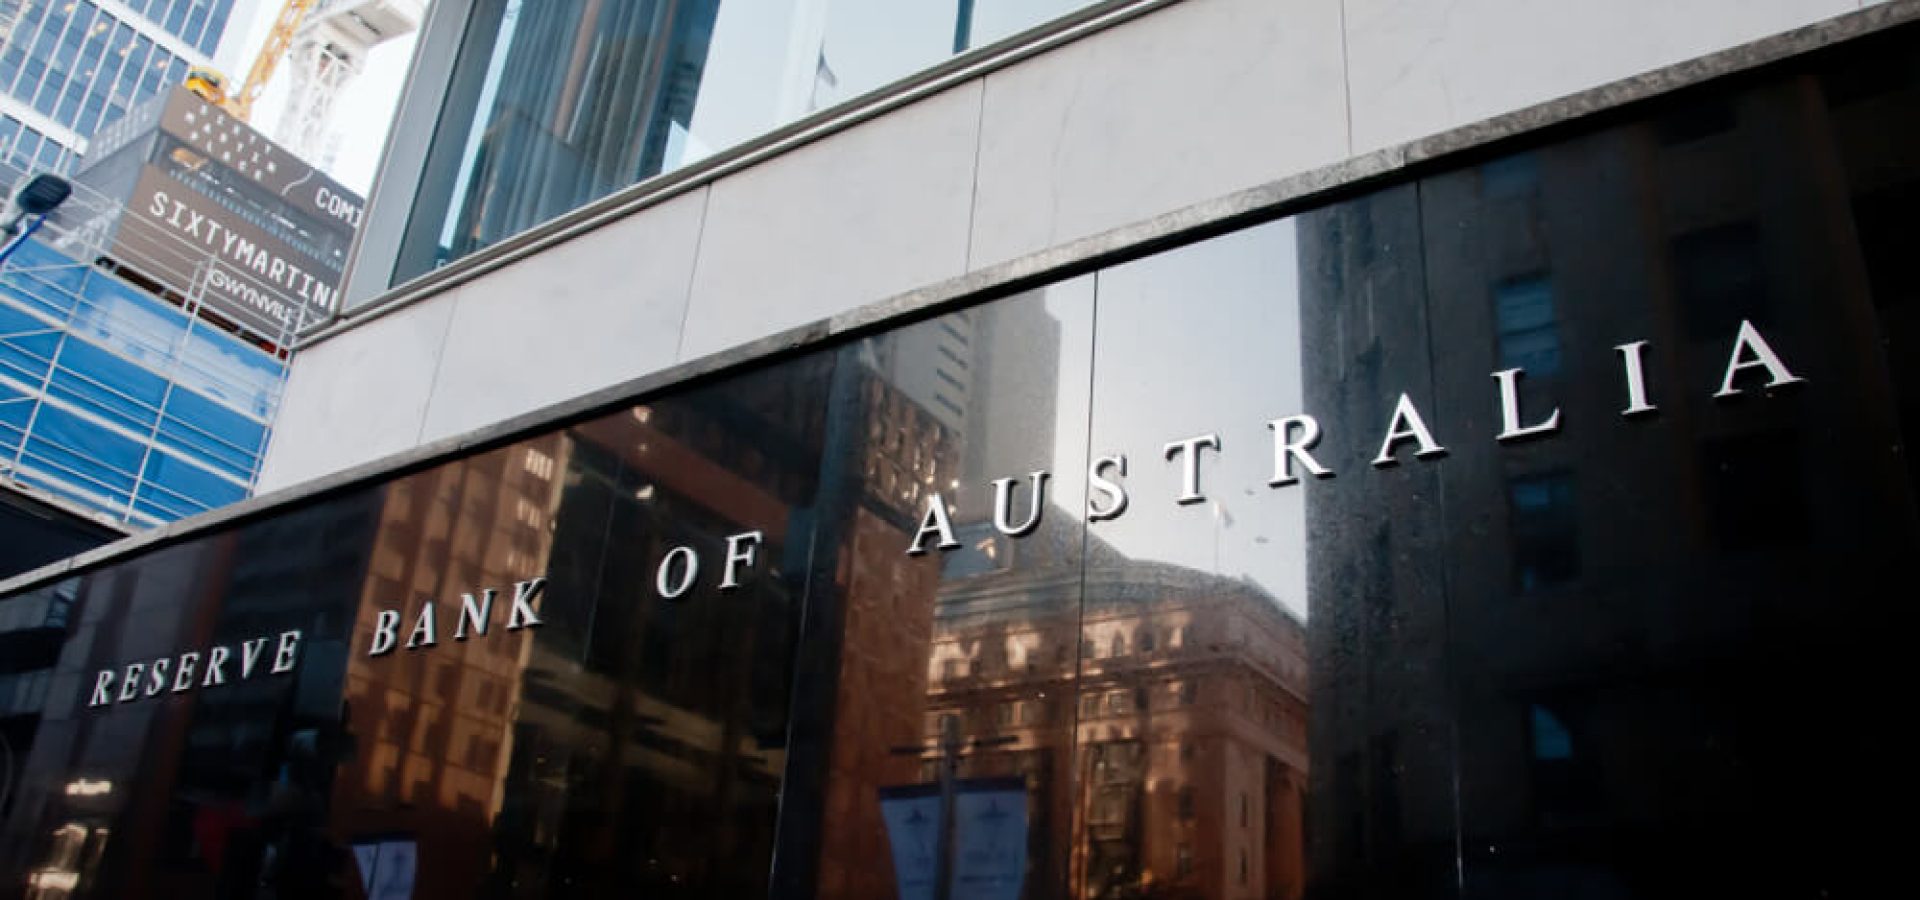 reserve bank of Australia